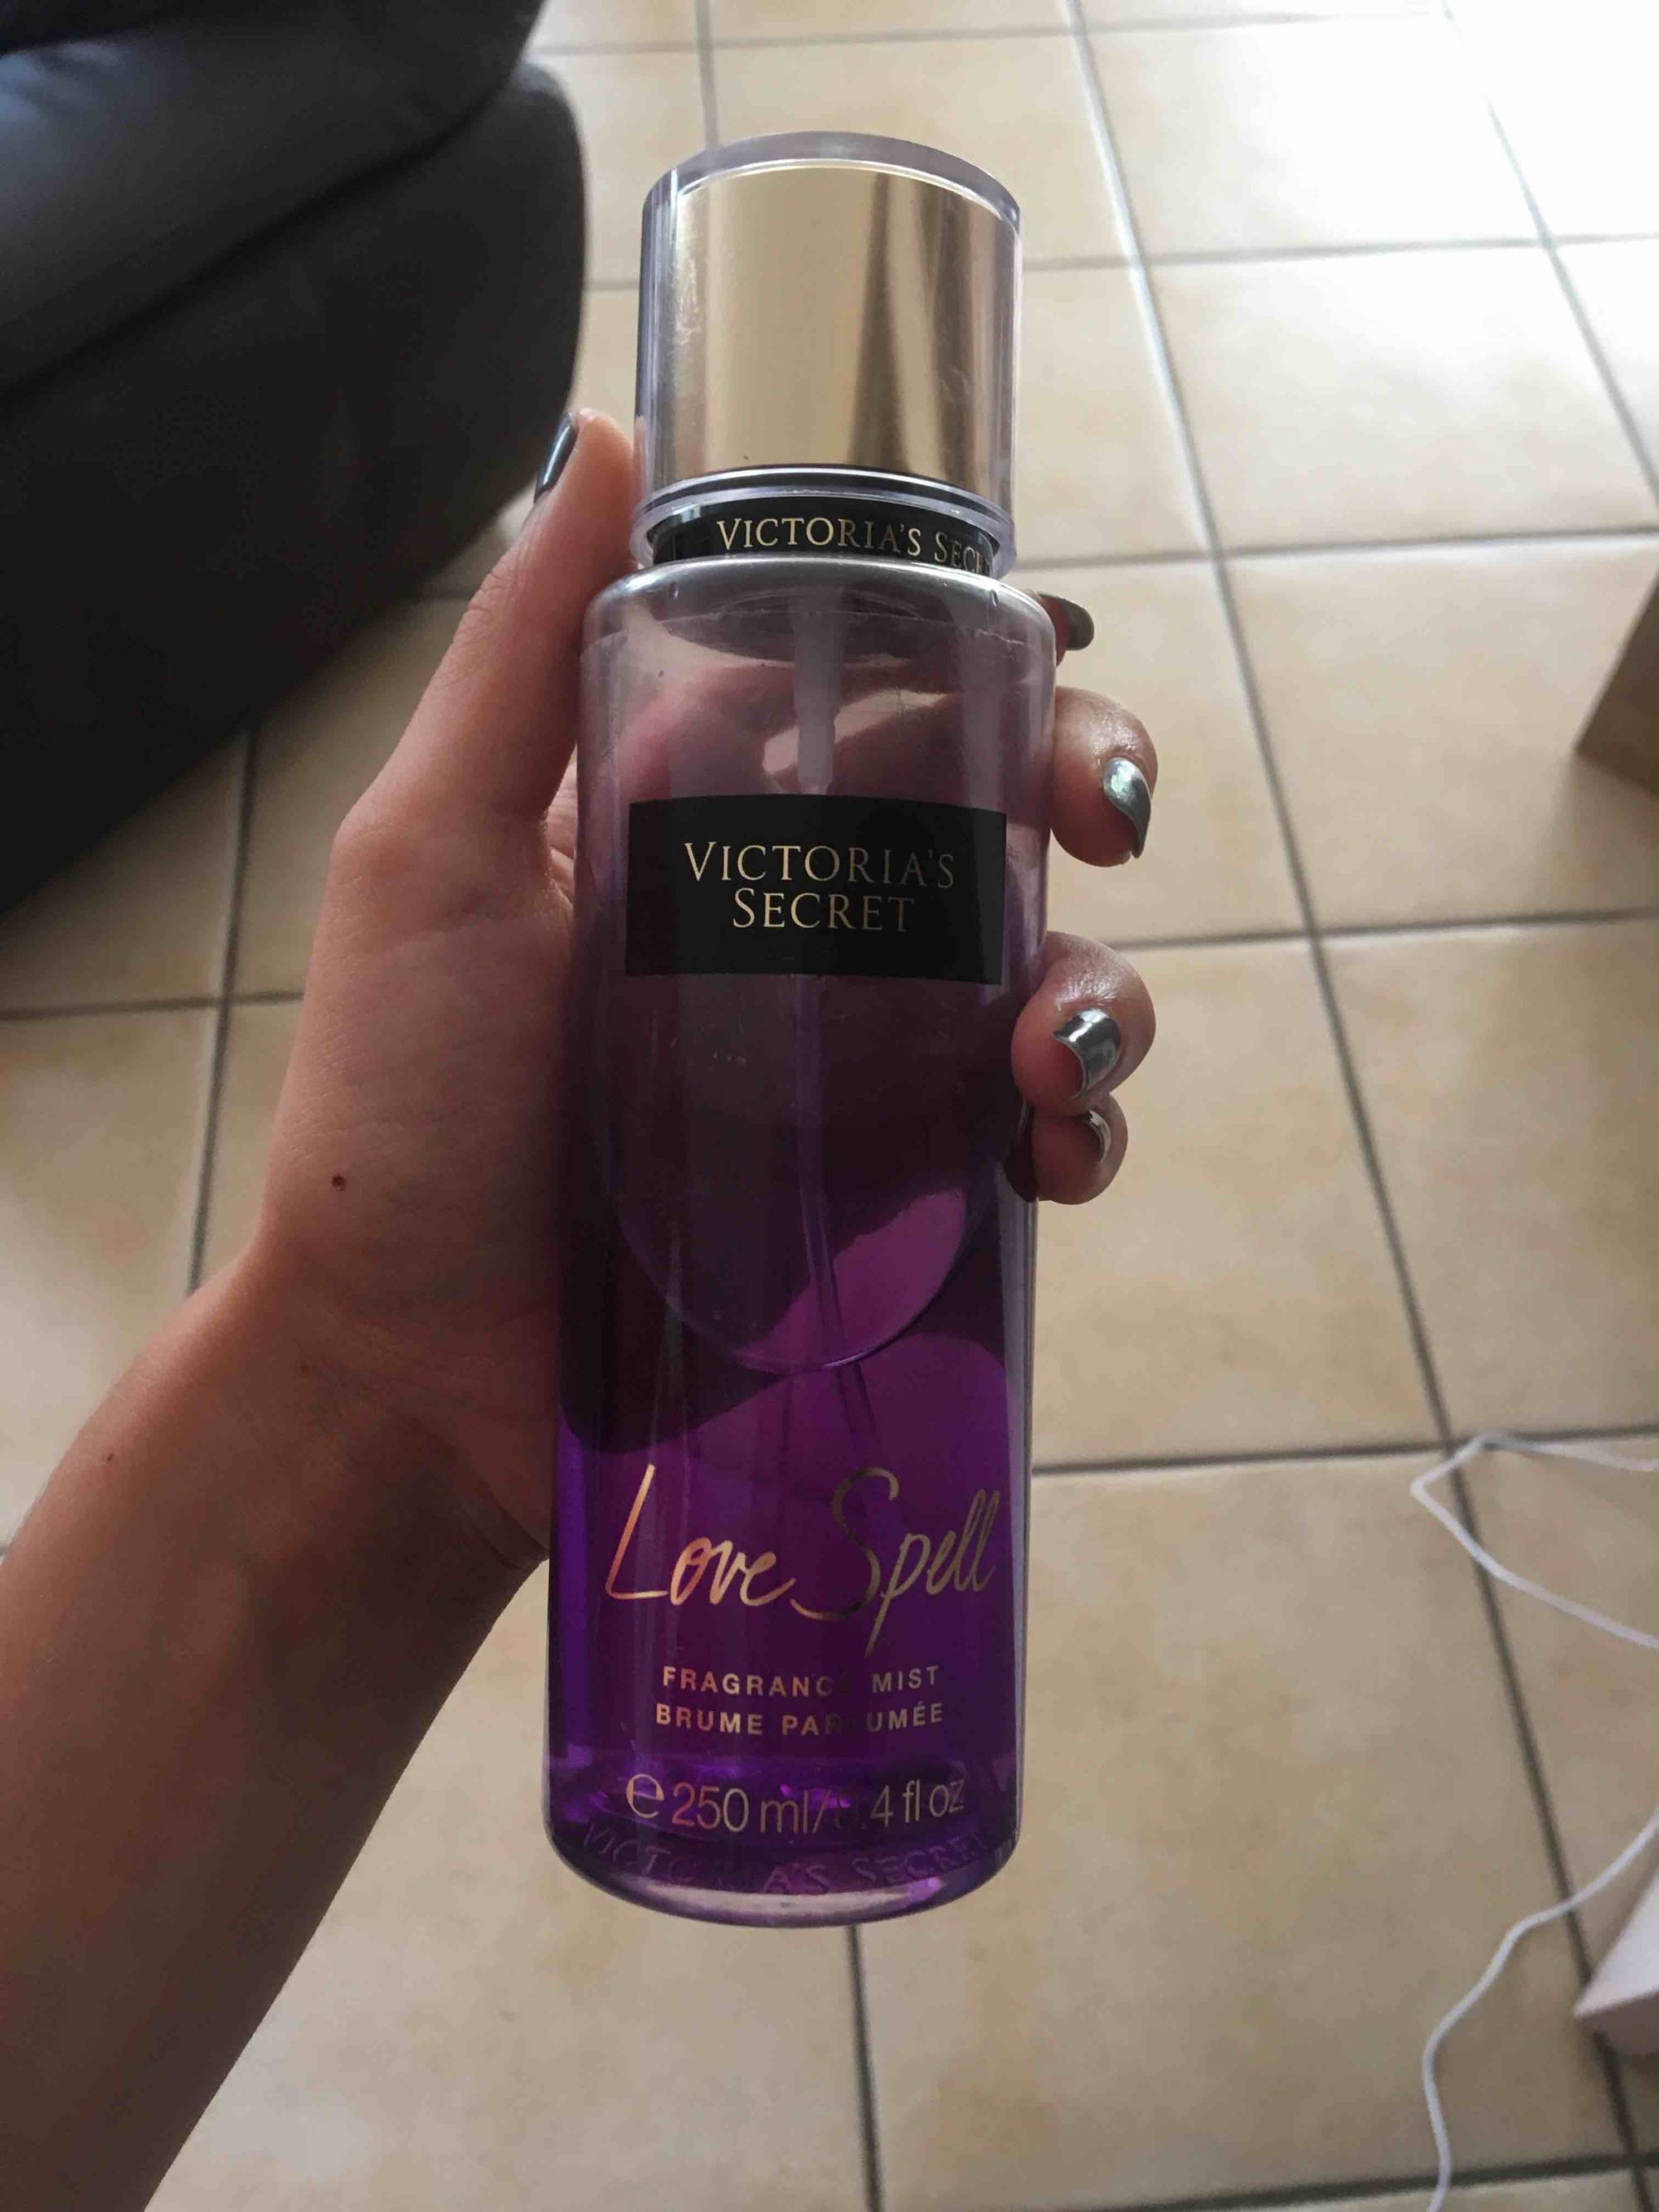 VICTORIA'S SECRET - Love spell - Brume parfumée